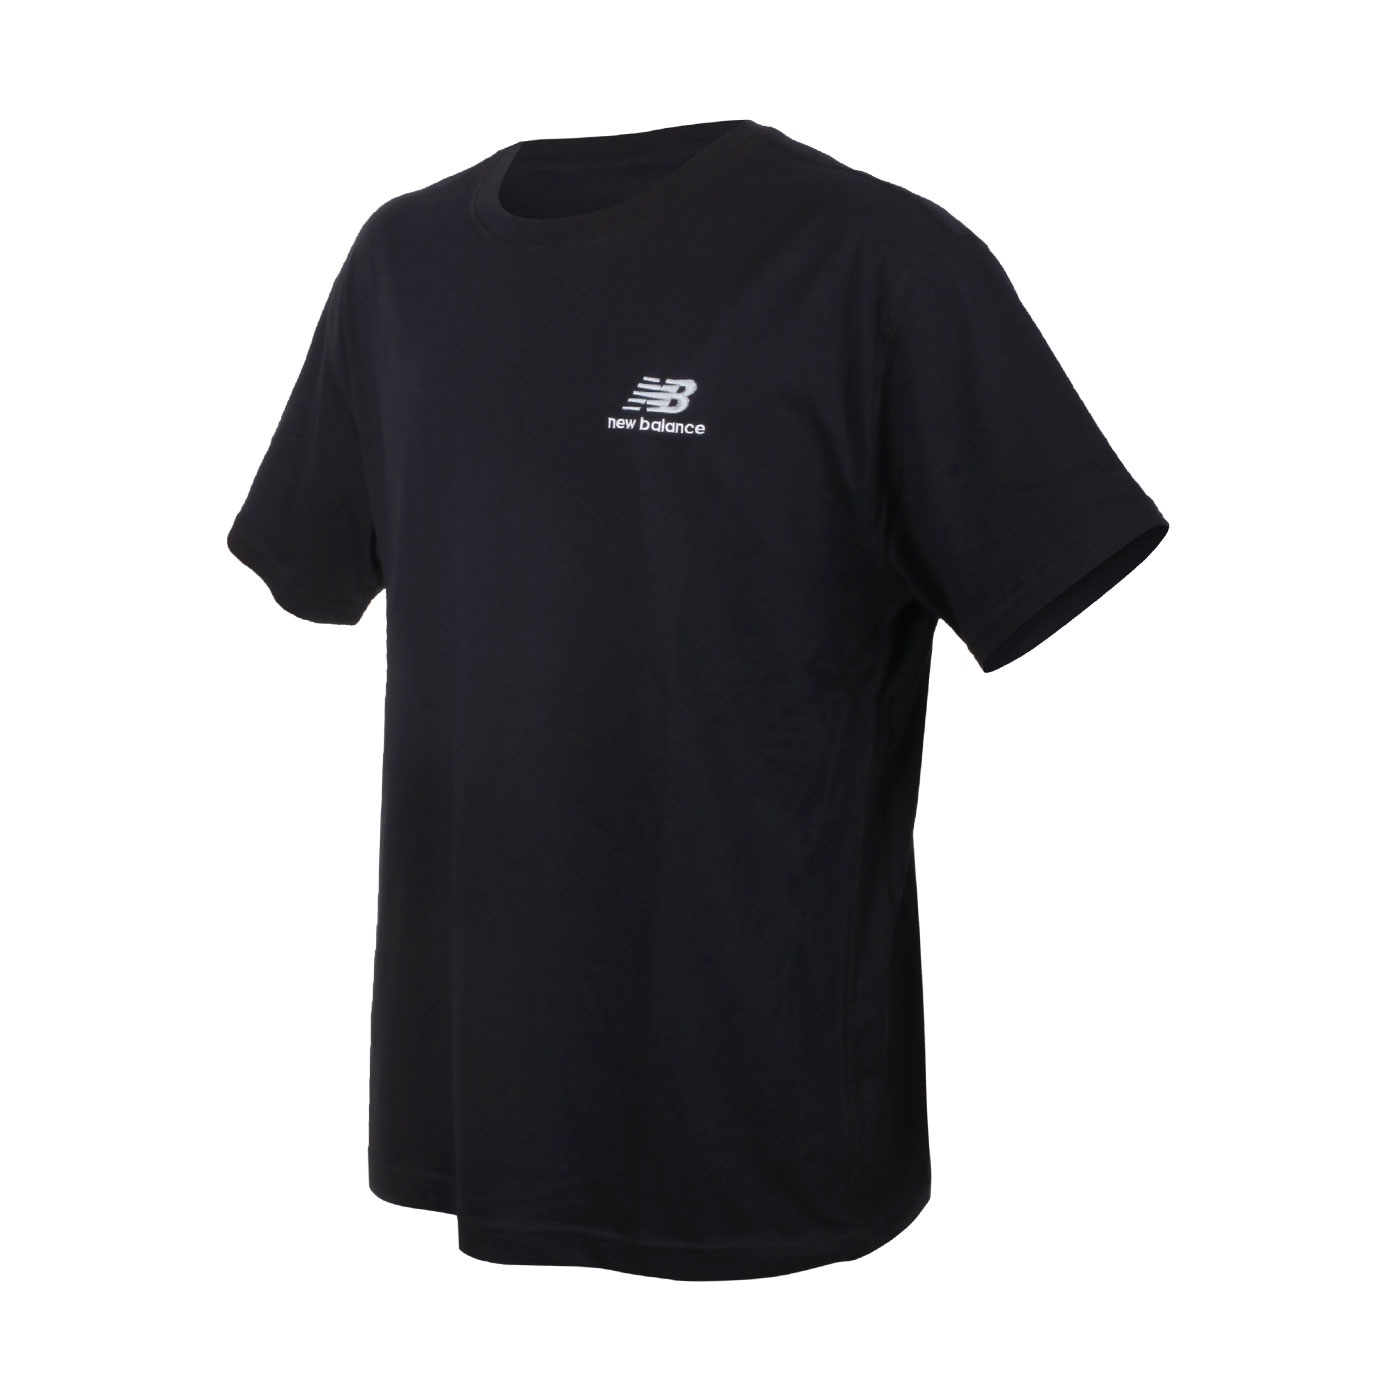 NEW BALANCE 男女款短袖T恤 UT21503BK - 黑灰白